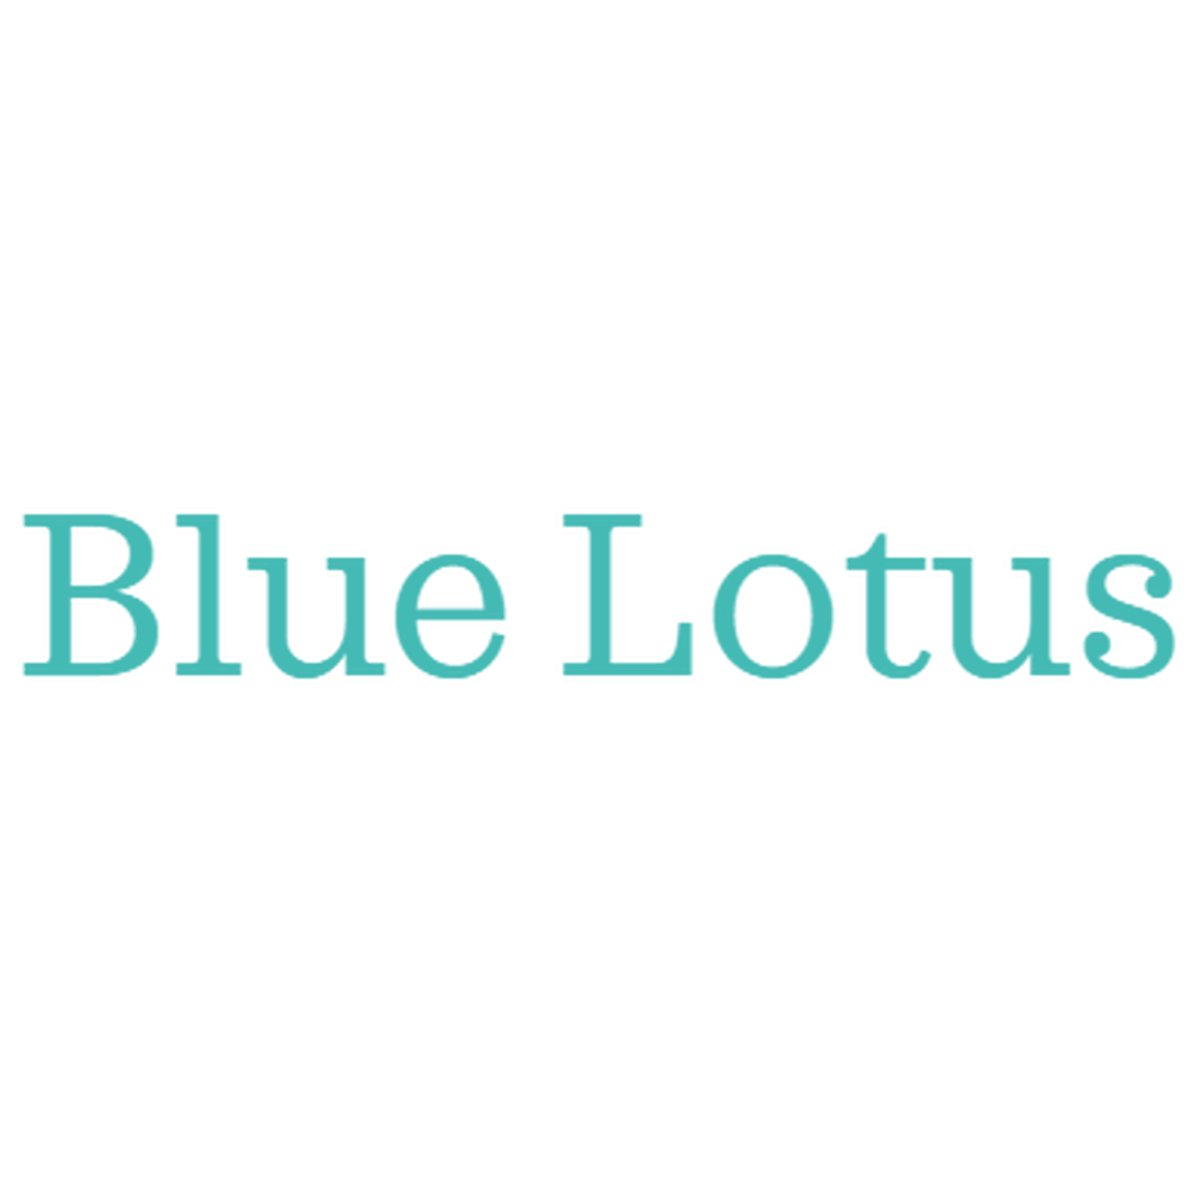 About Blue Lotus サンキャッチャーと癒しの空間